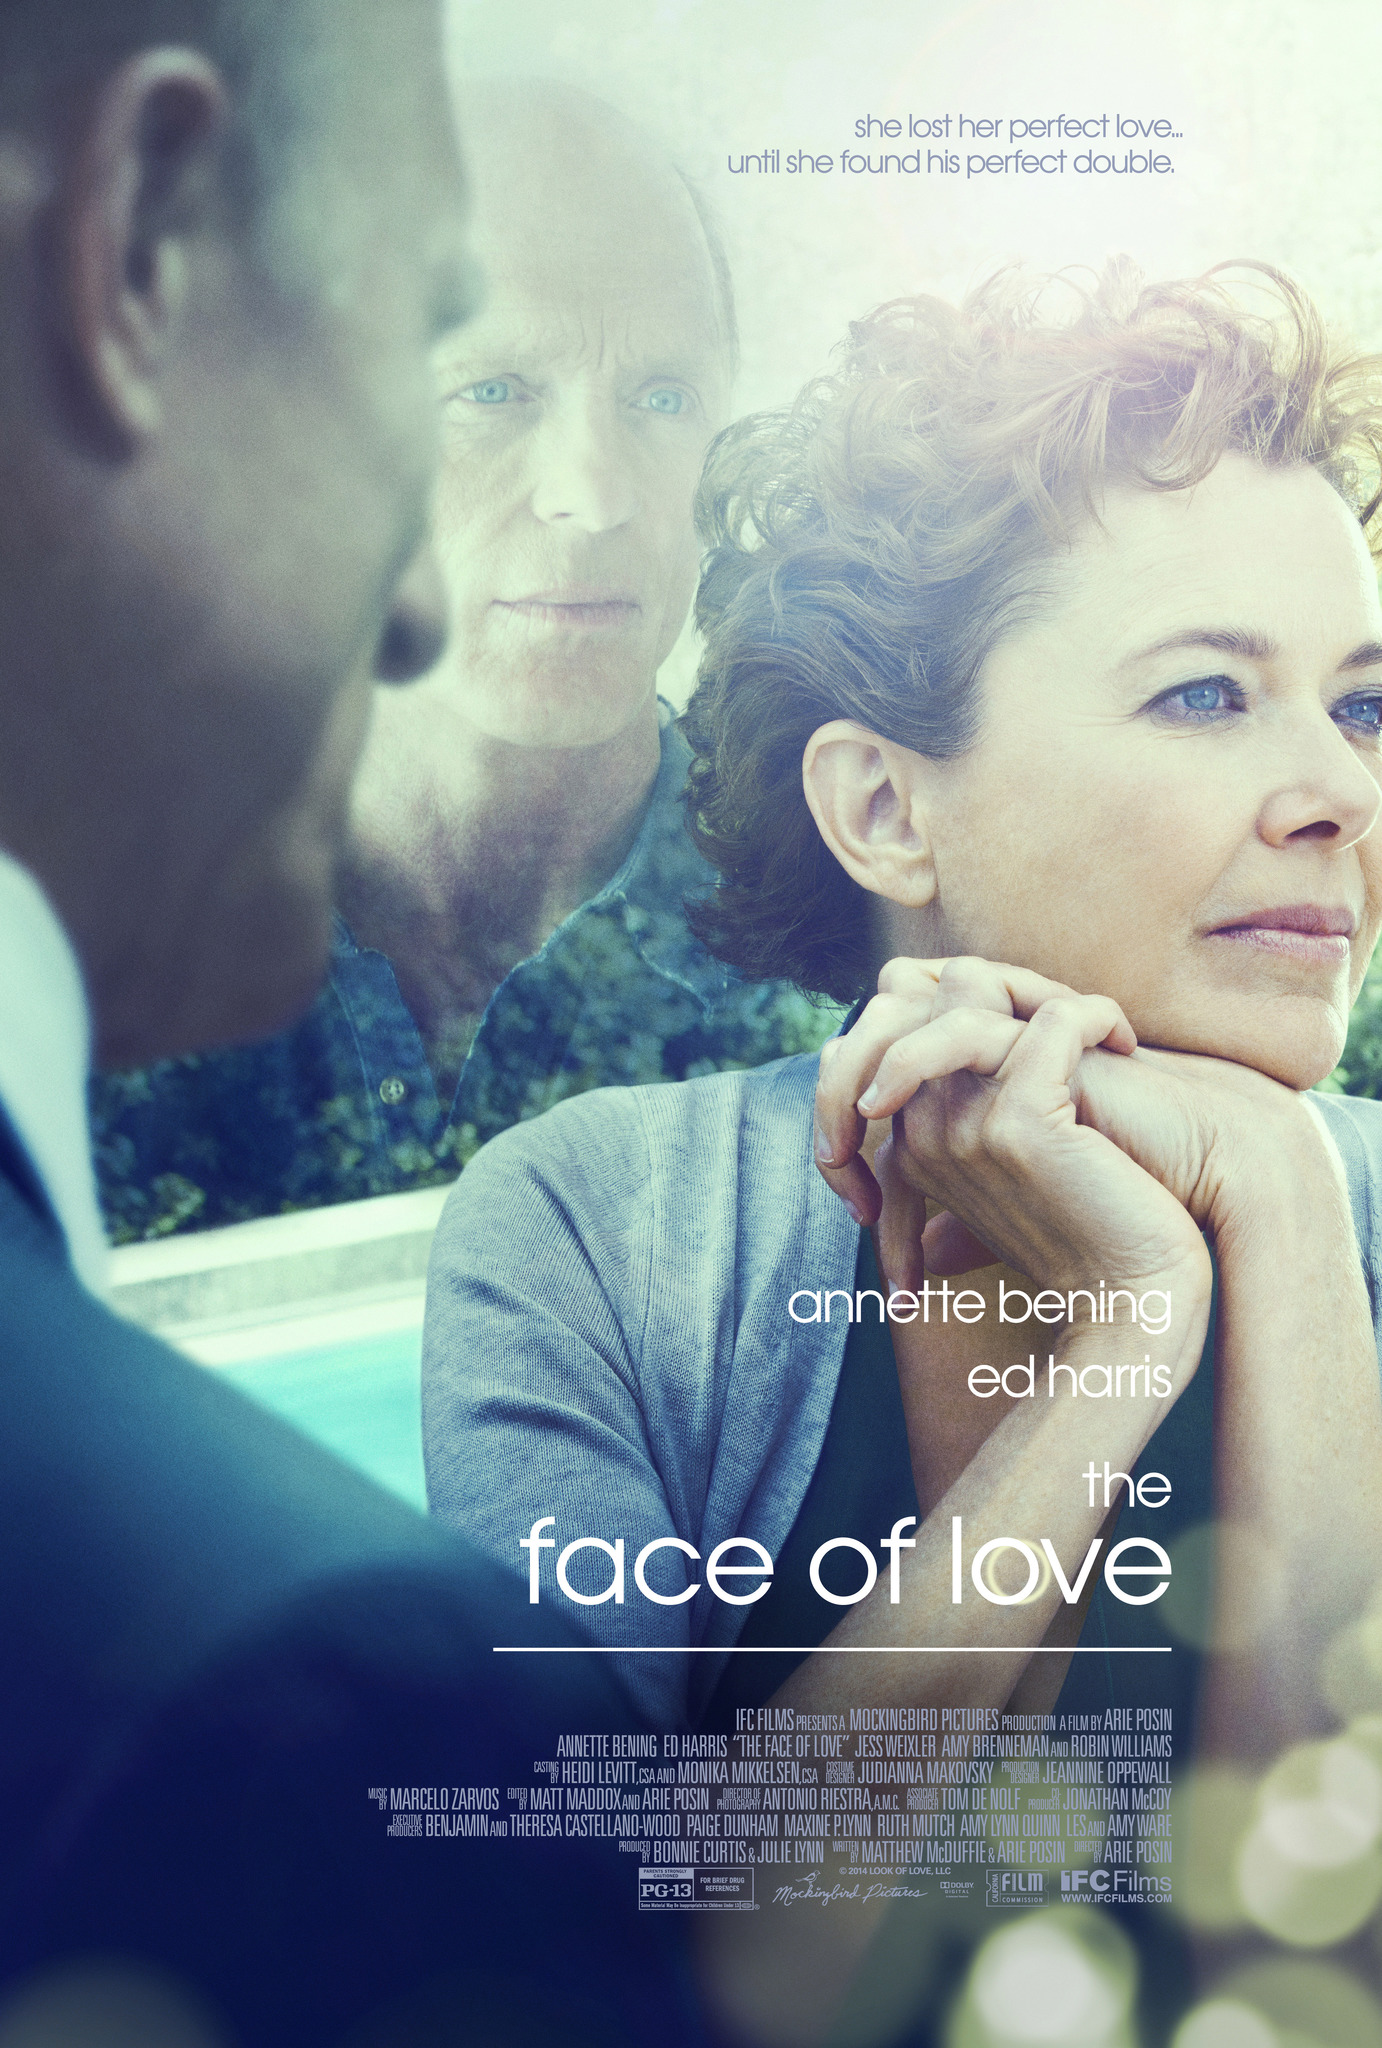 Nonton film The Face of Love layarkaca21 indoxx1 ganool online streaming terbaru